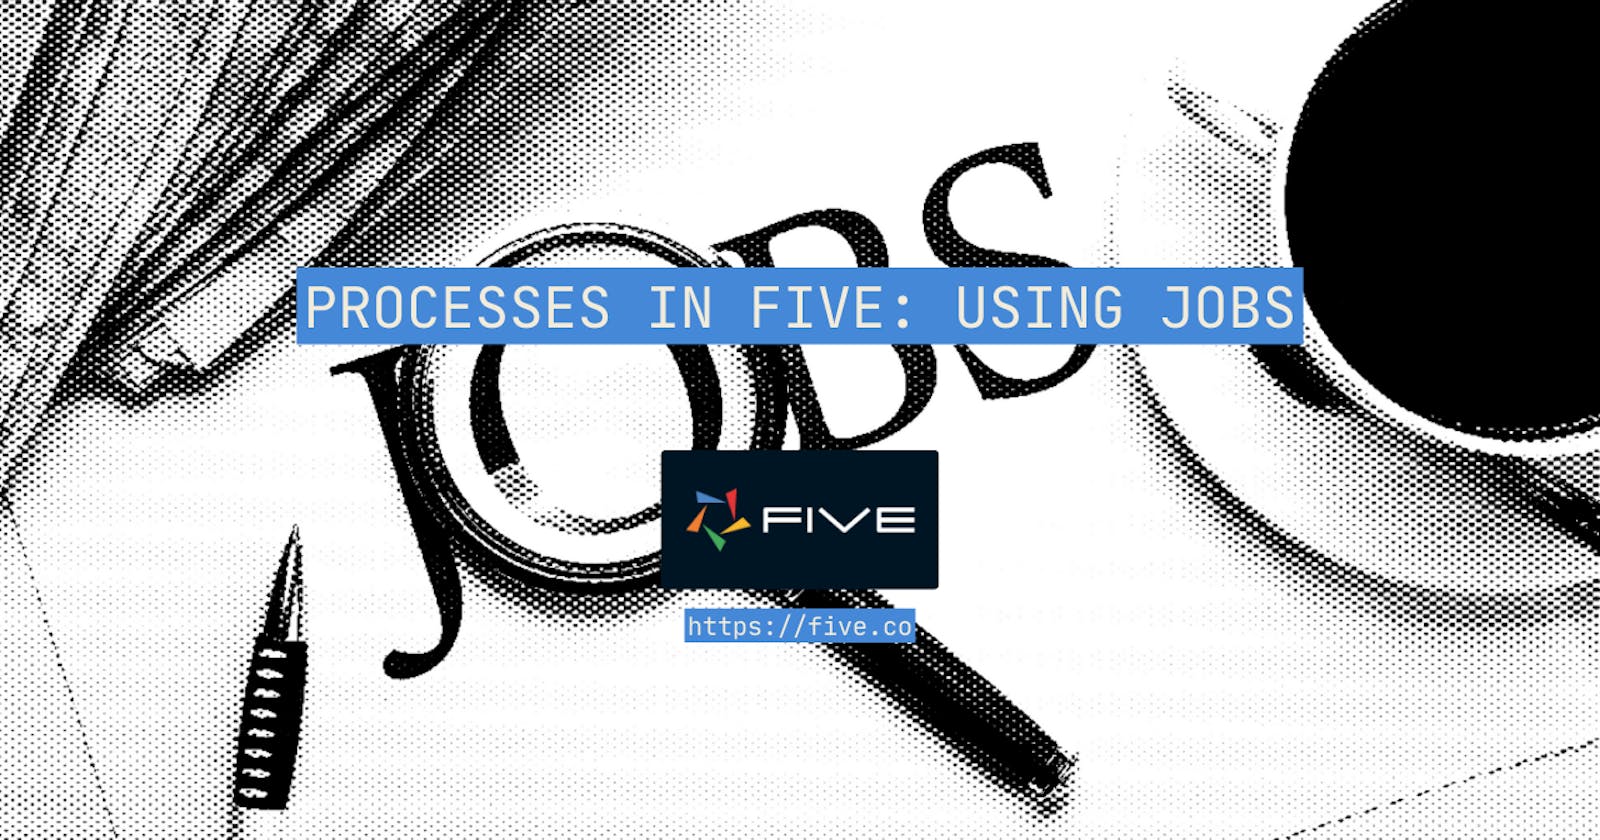 In Five: Using Jobs